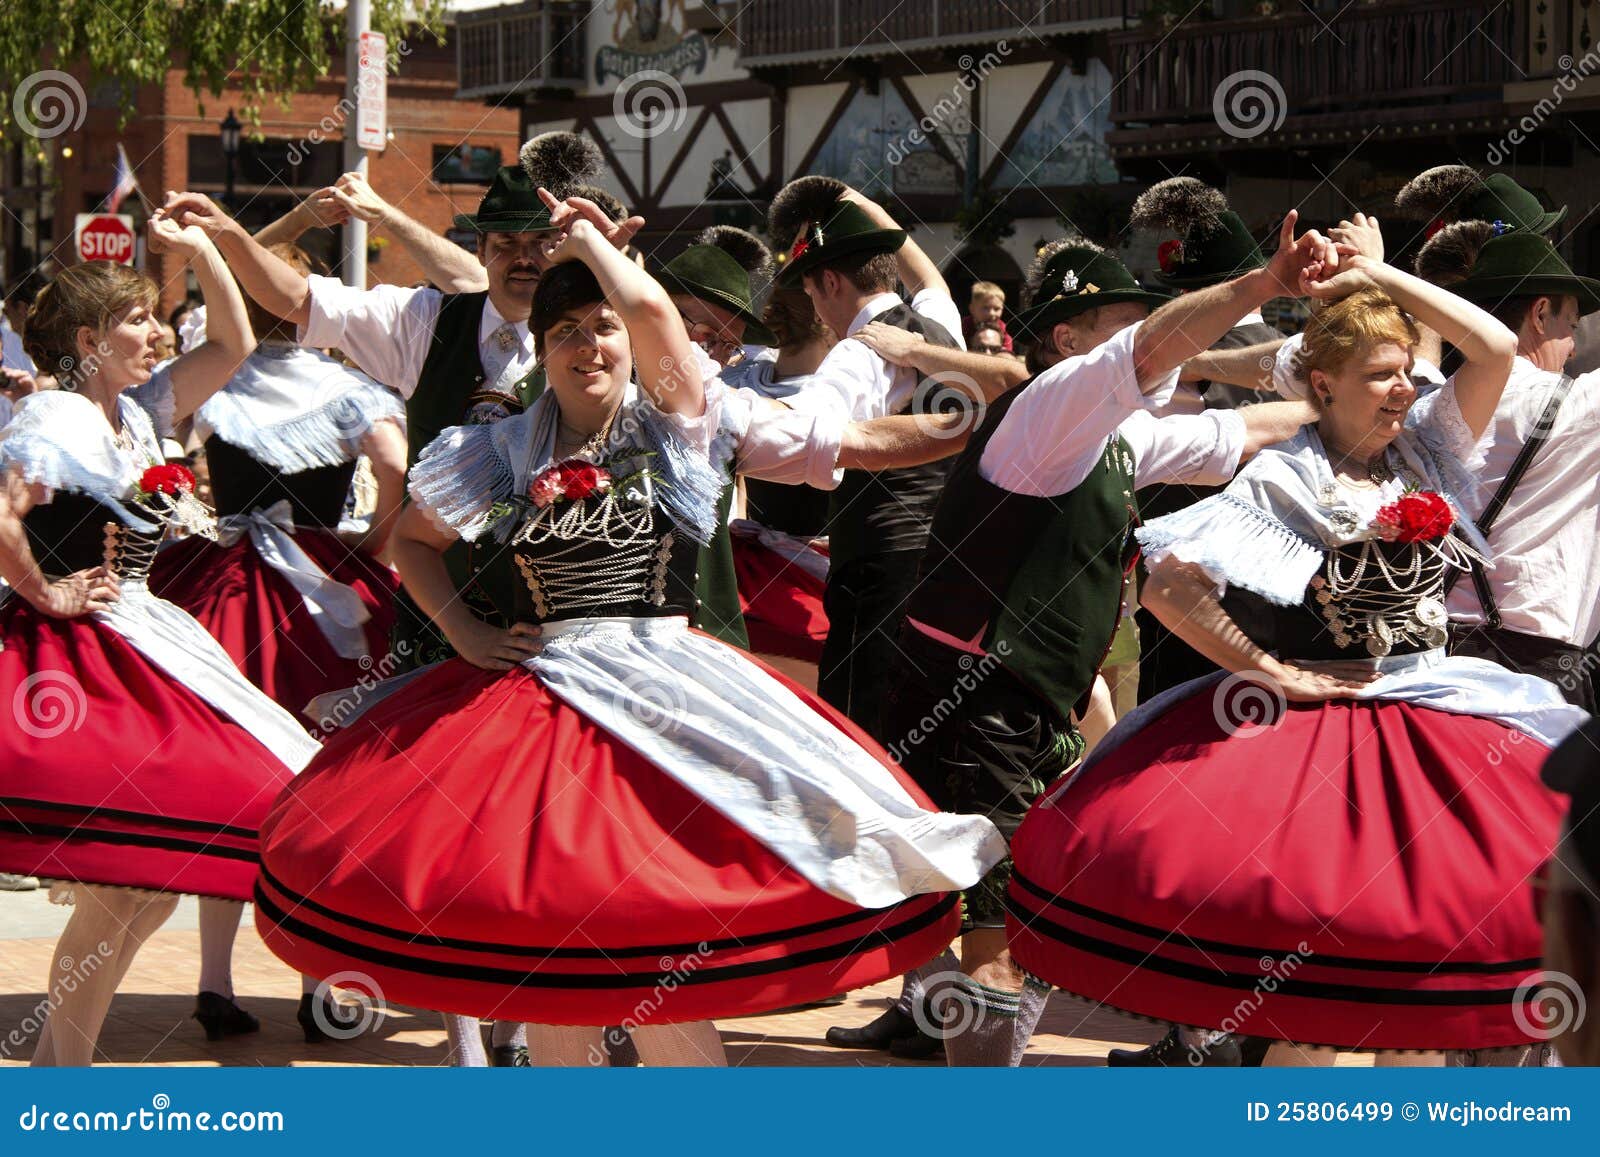 German Traditional Dance